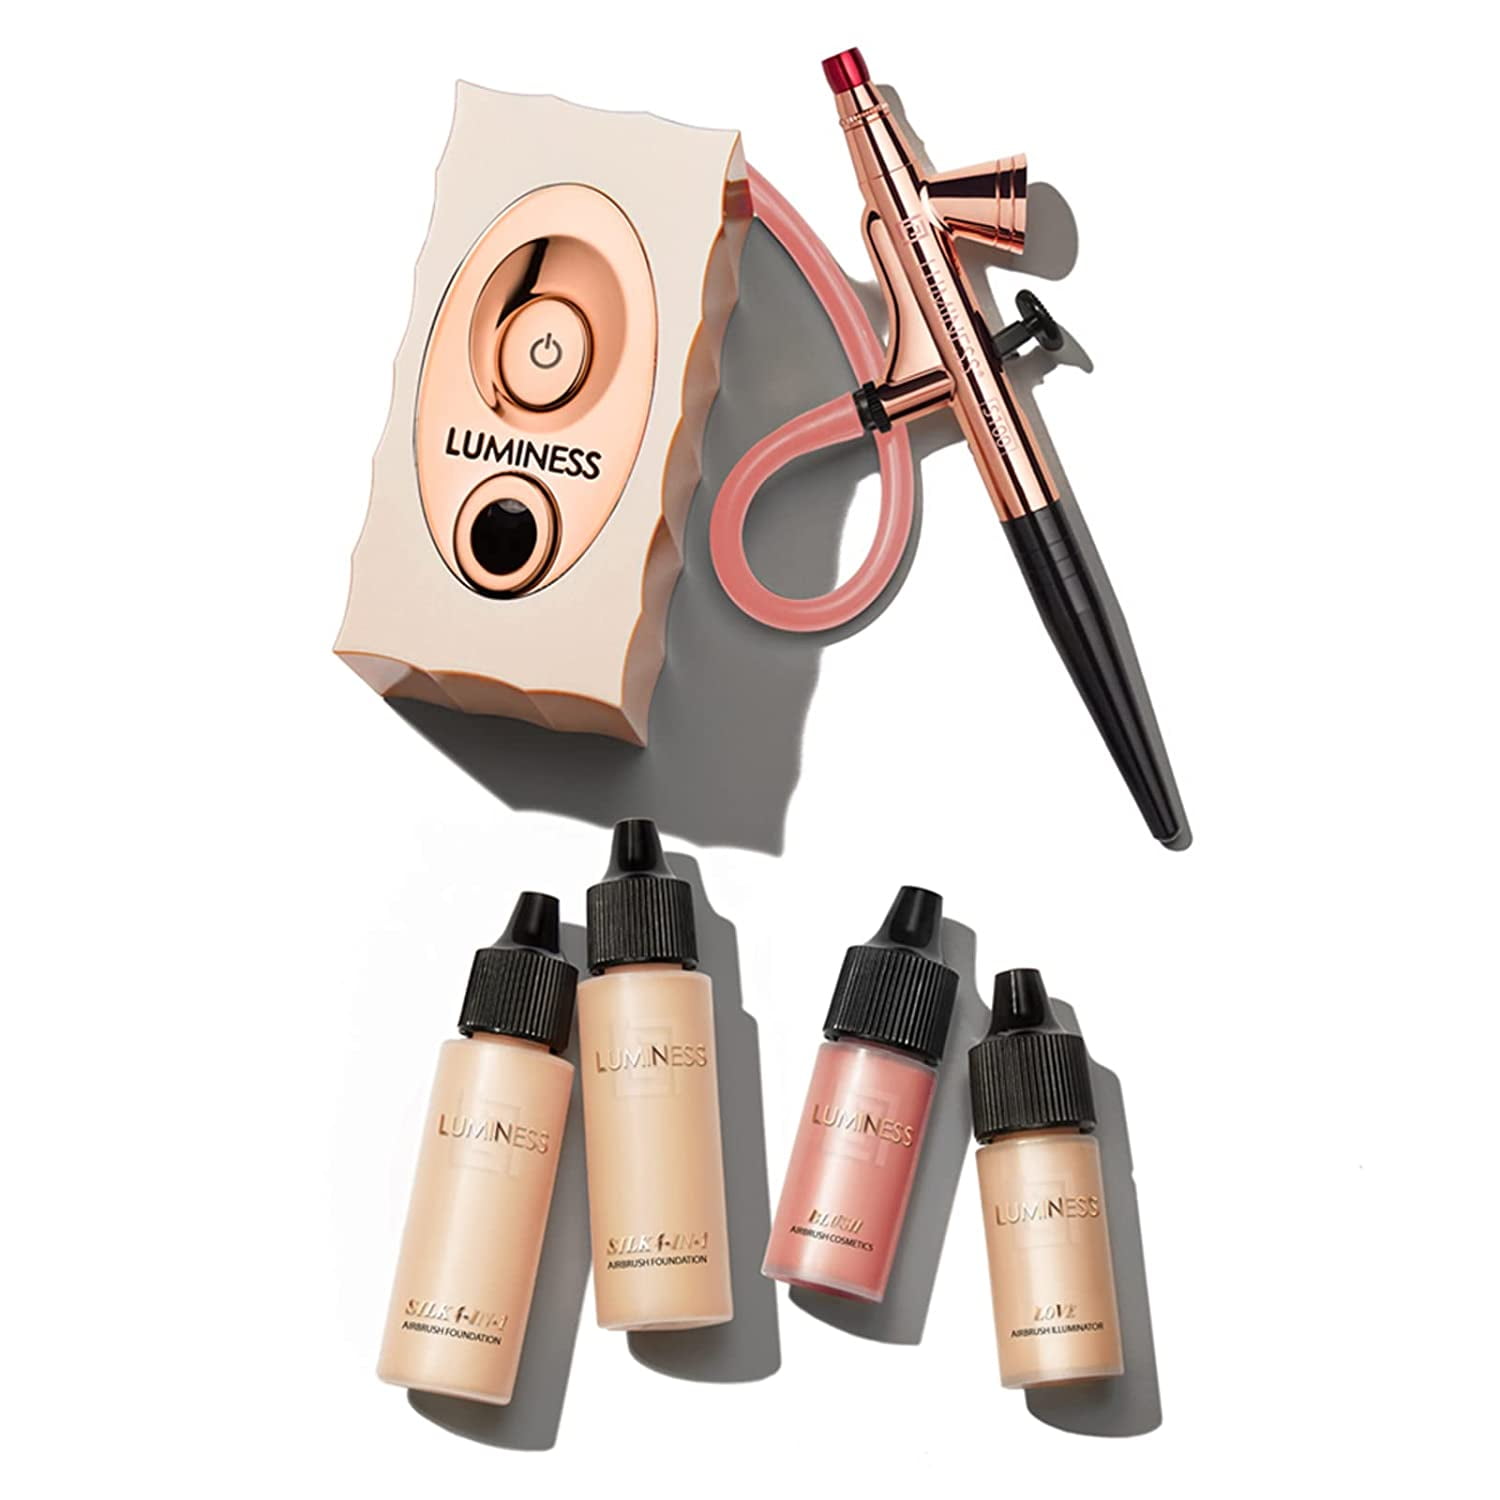 luminess air heiress airbrush makeup system heiress airbrush